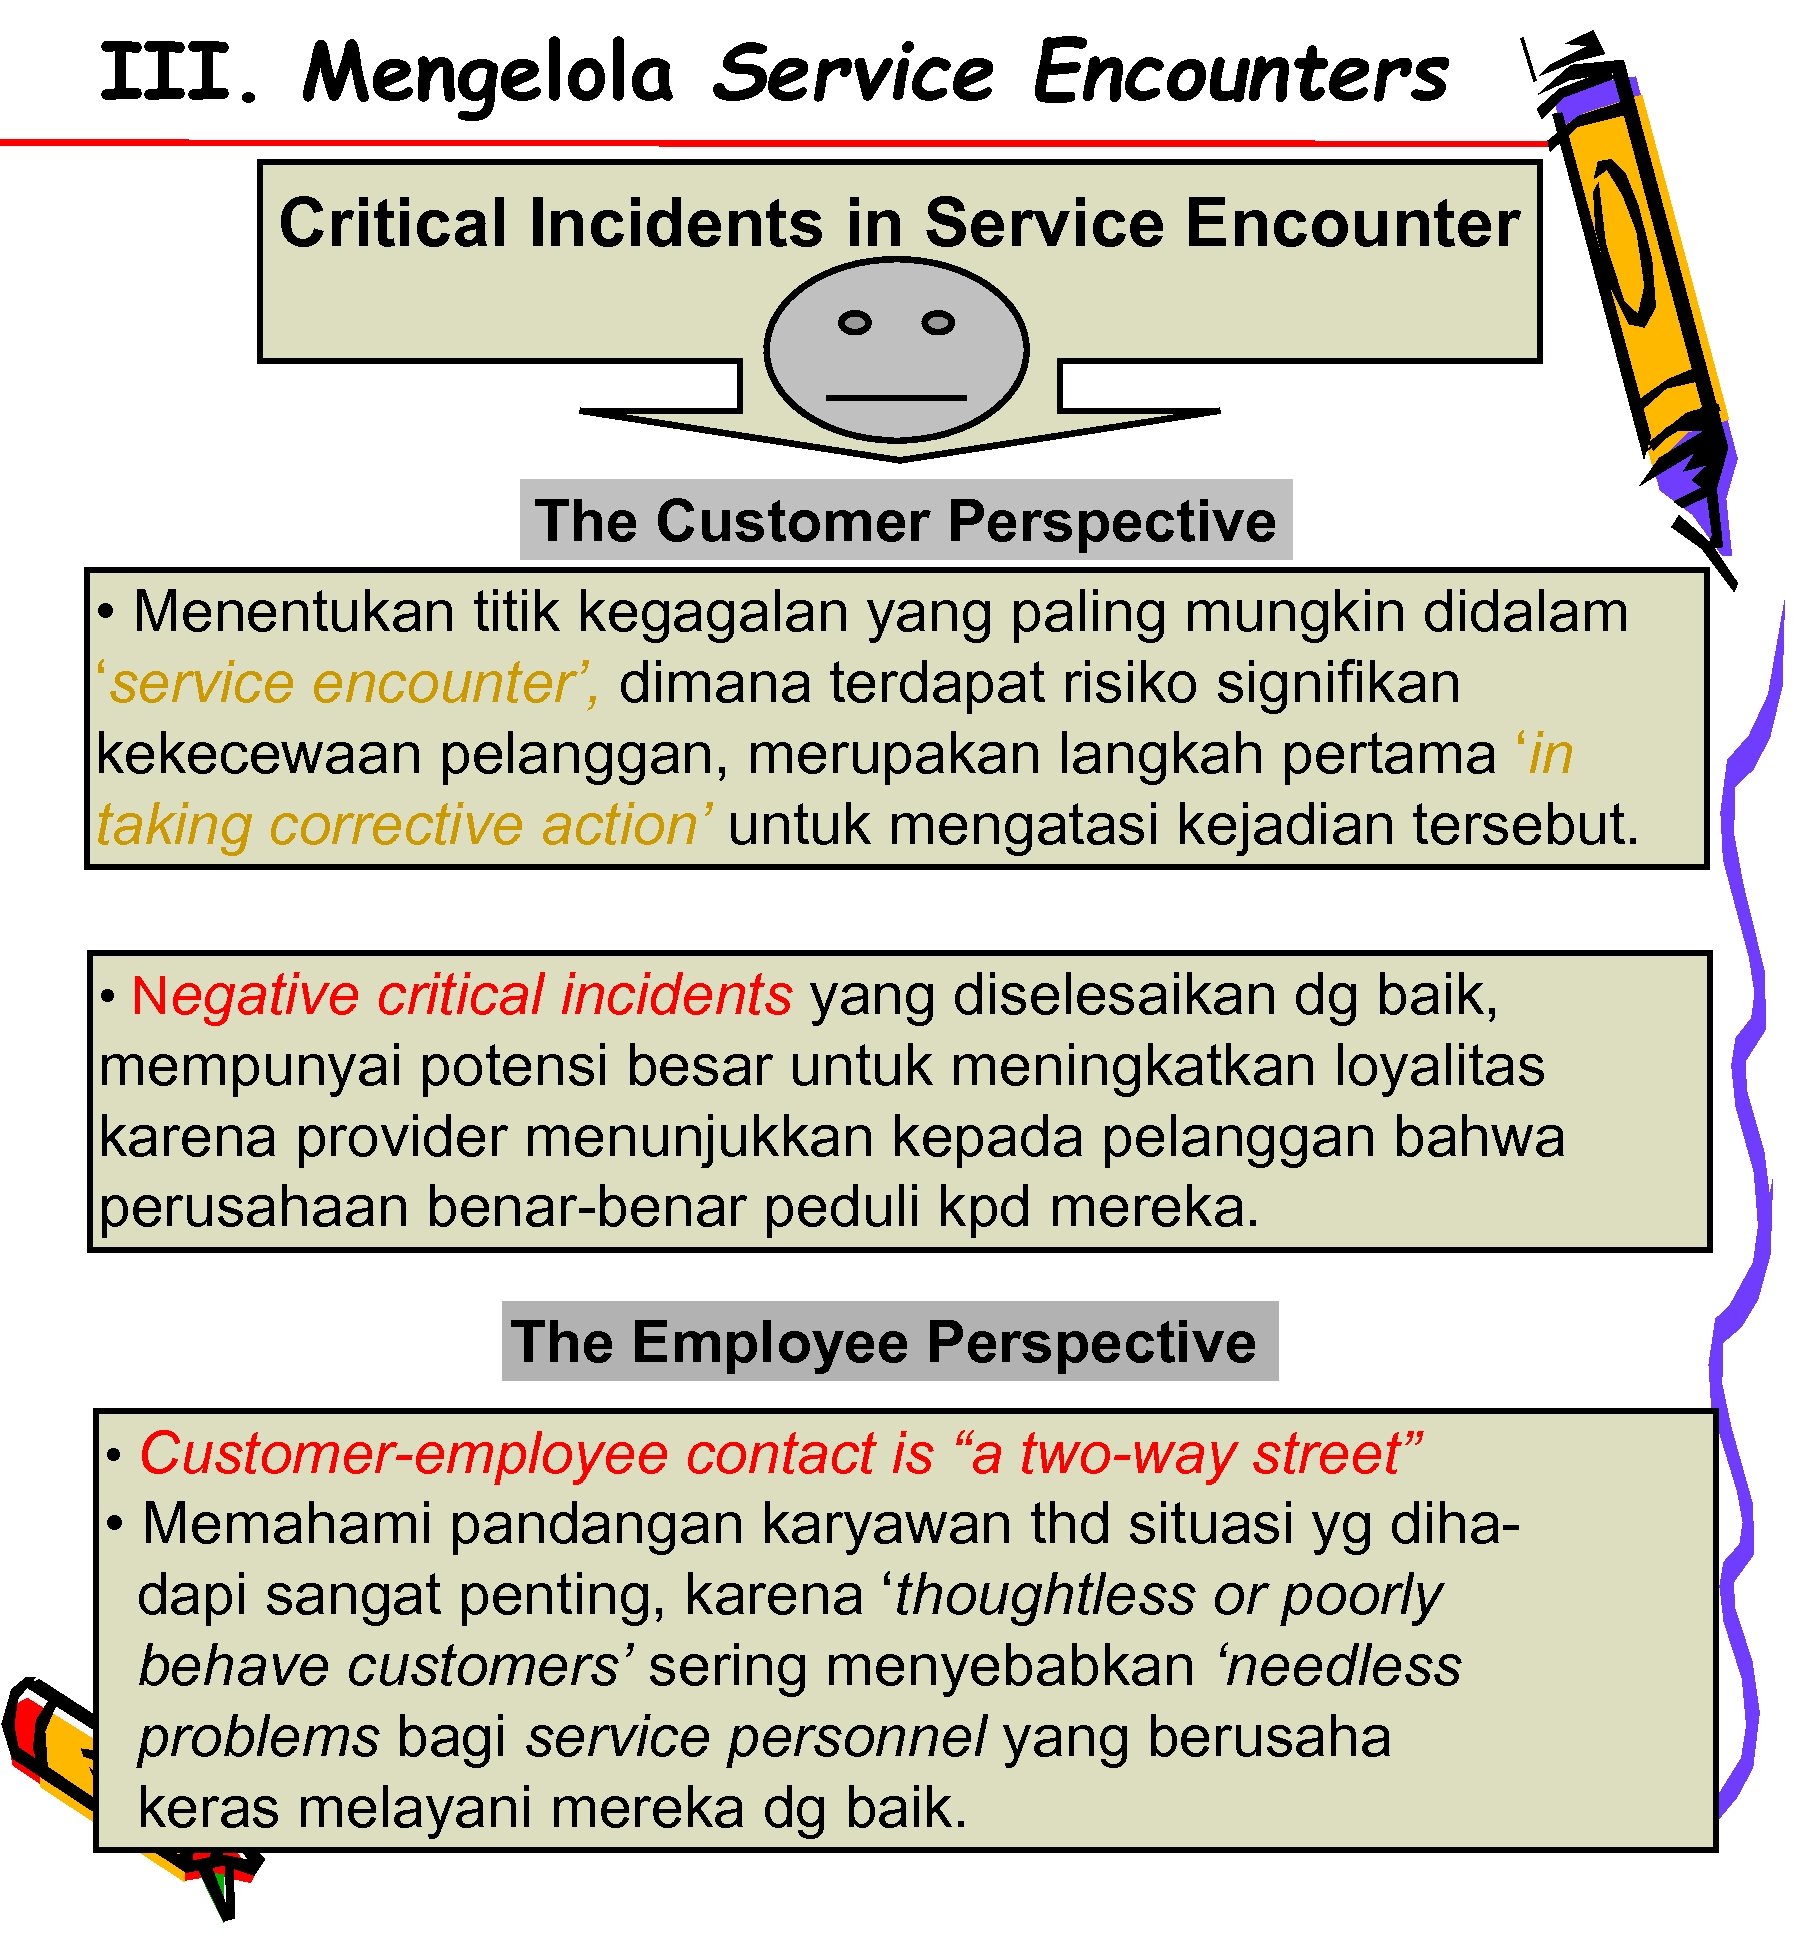 III. Mengelola Service Encounters Critical Incidents in Service Encounter The Customer Perspective • Menentukan